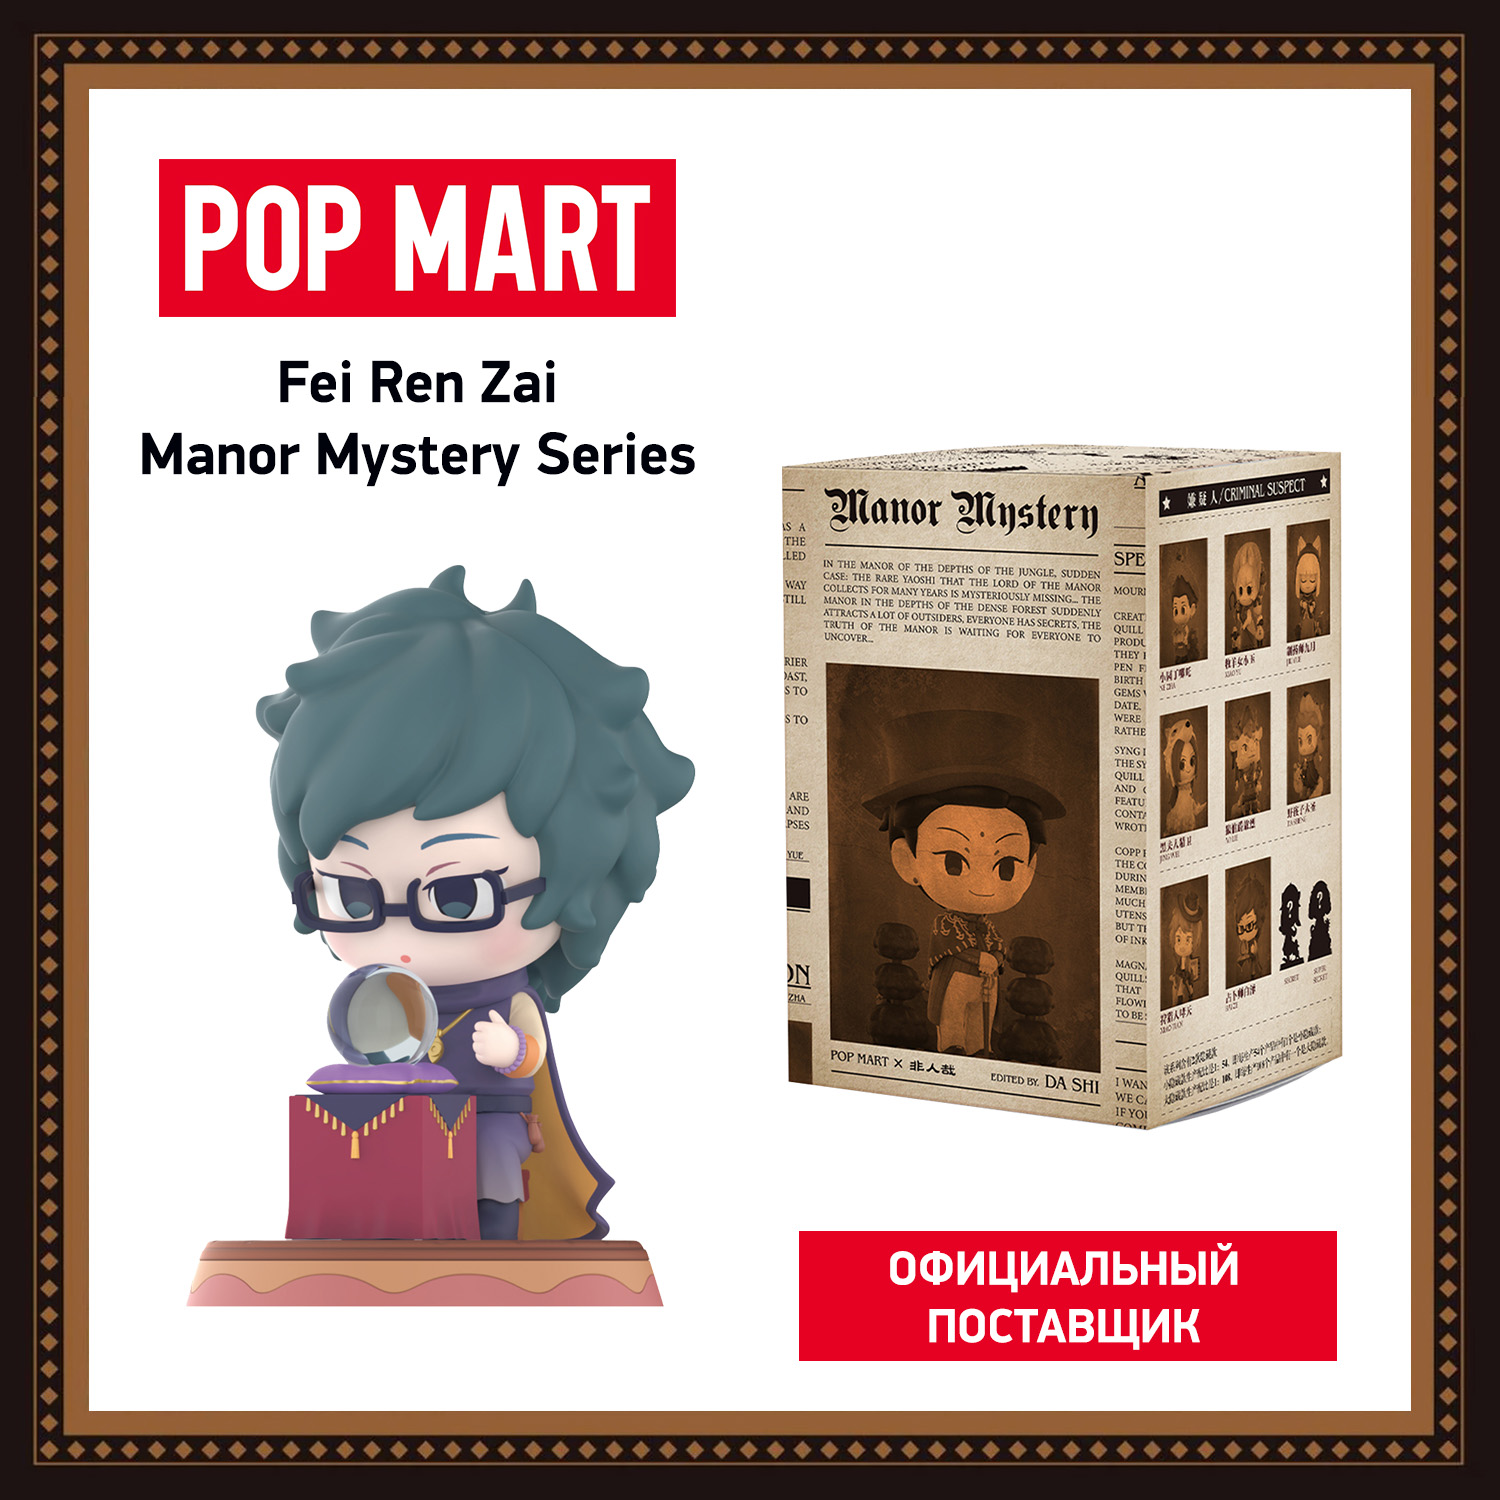 Коллекционная фигурка Pop Mart Fei Ren Zai Manor Mystery фигурка коллекционная диносити микс